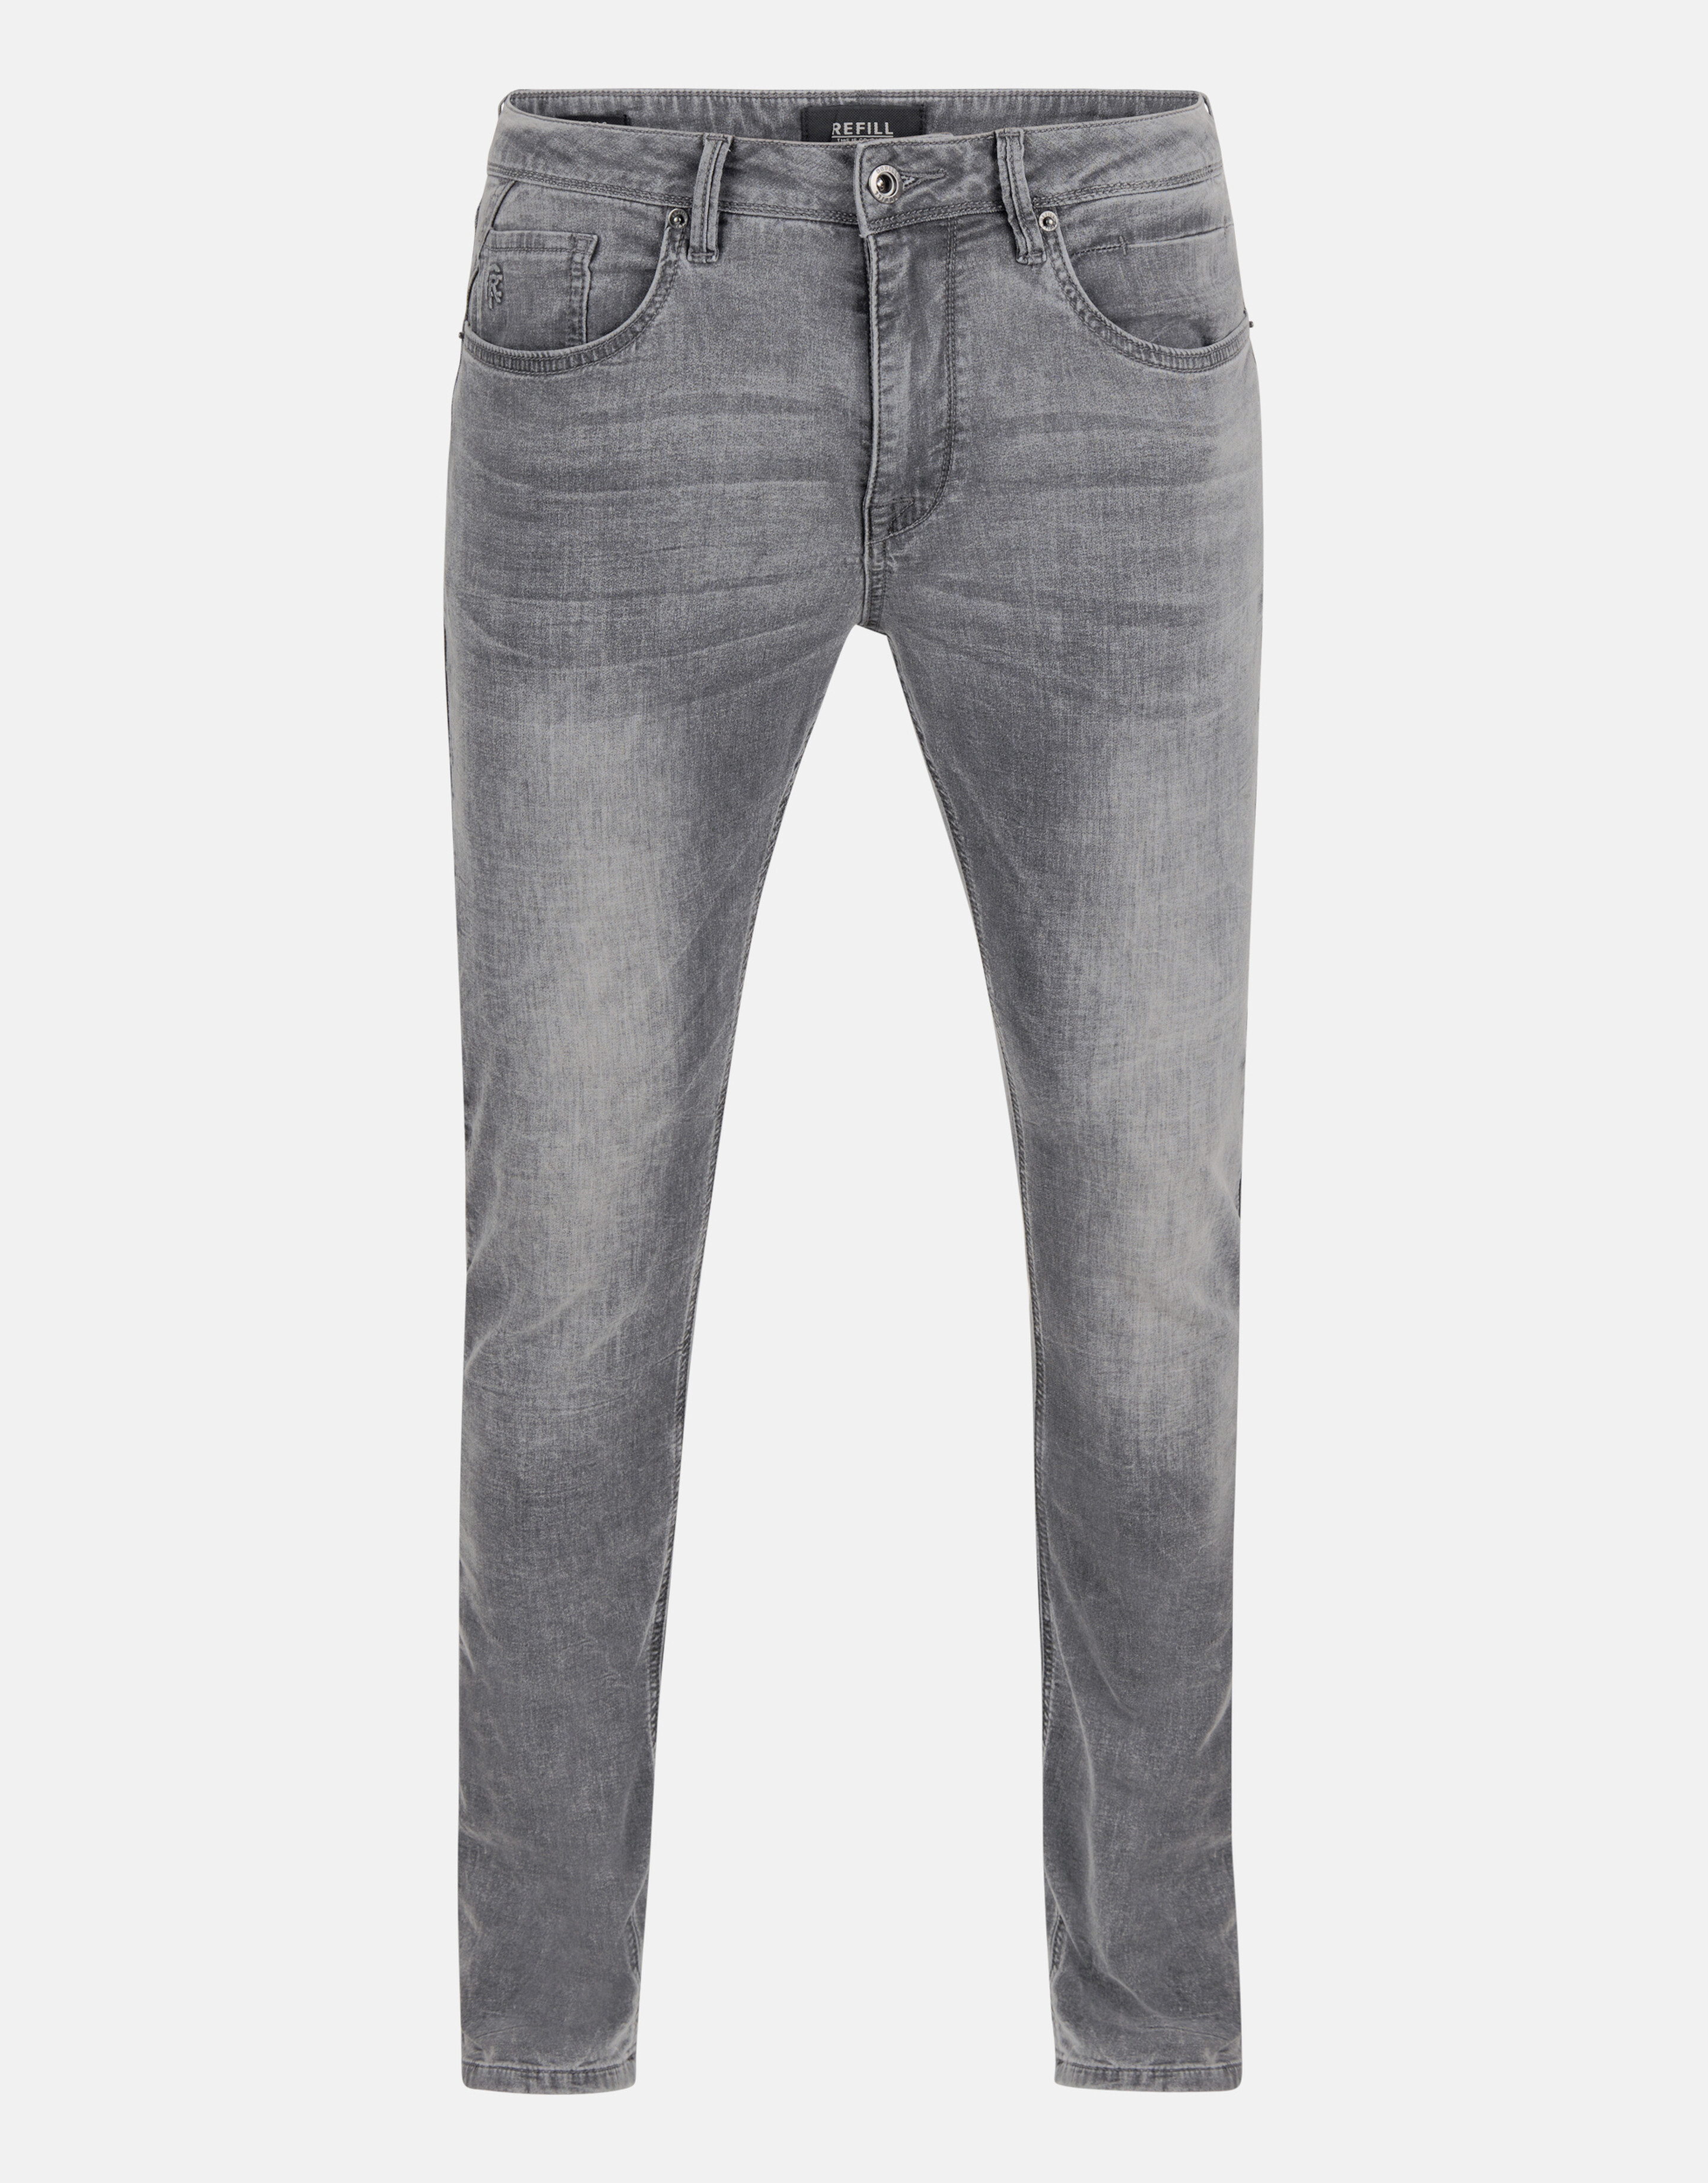 Lucas Slim Jeans L34 Refill